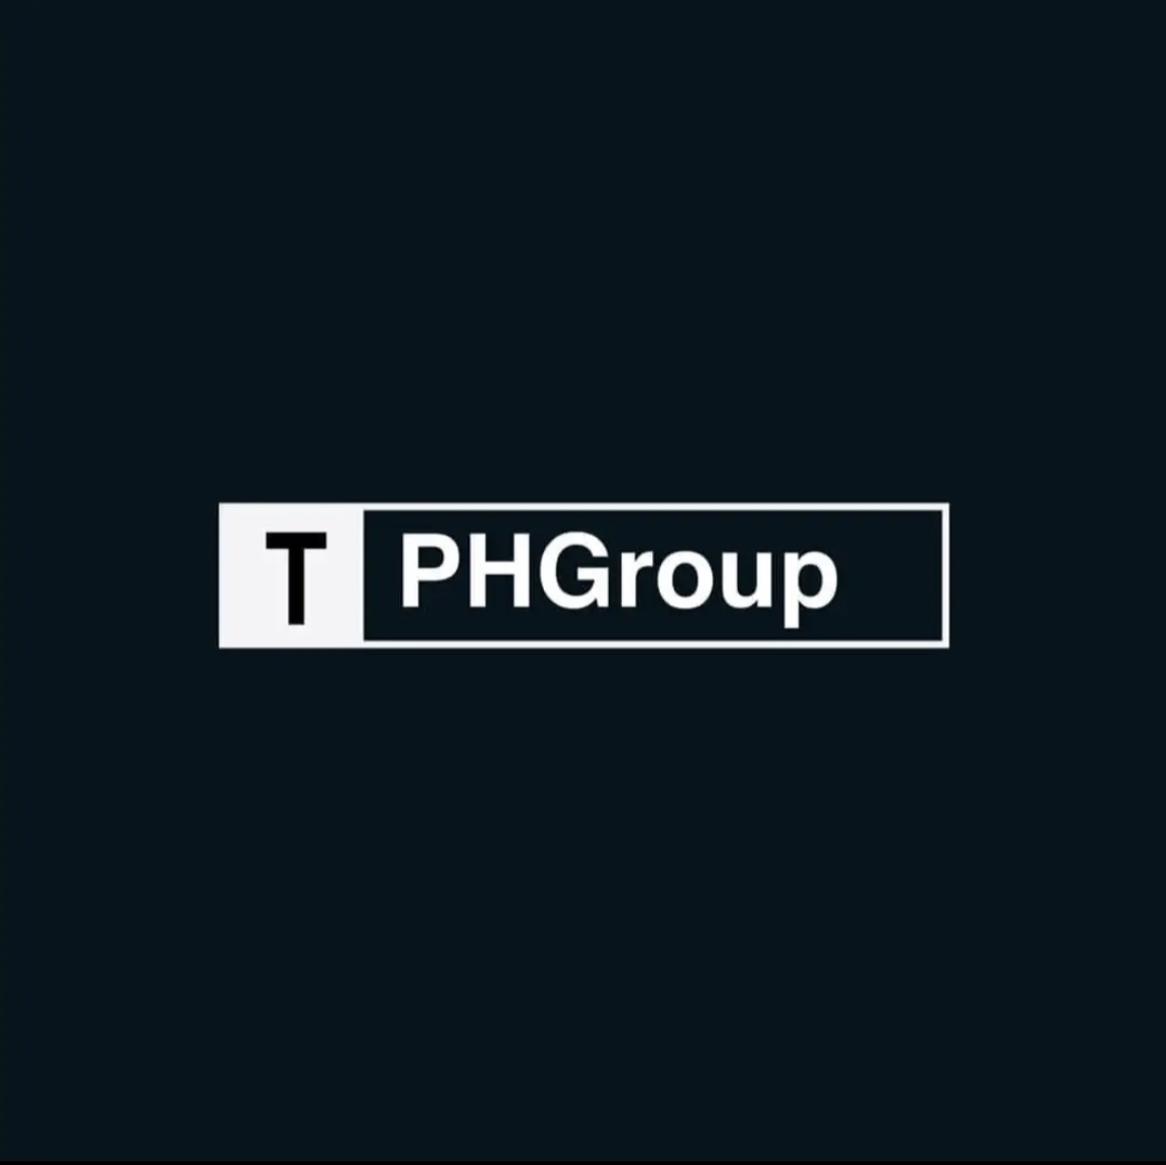 TPHGROUP's images